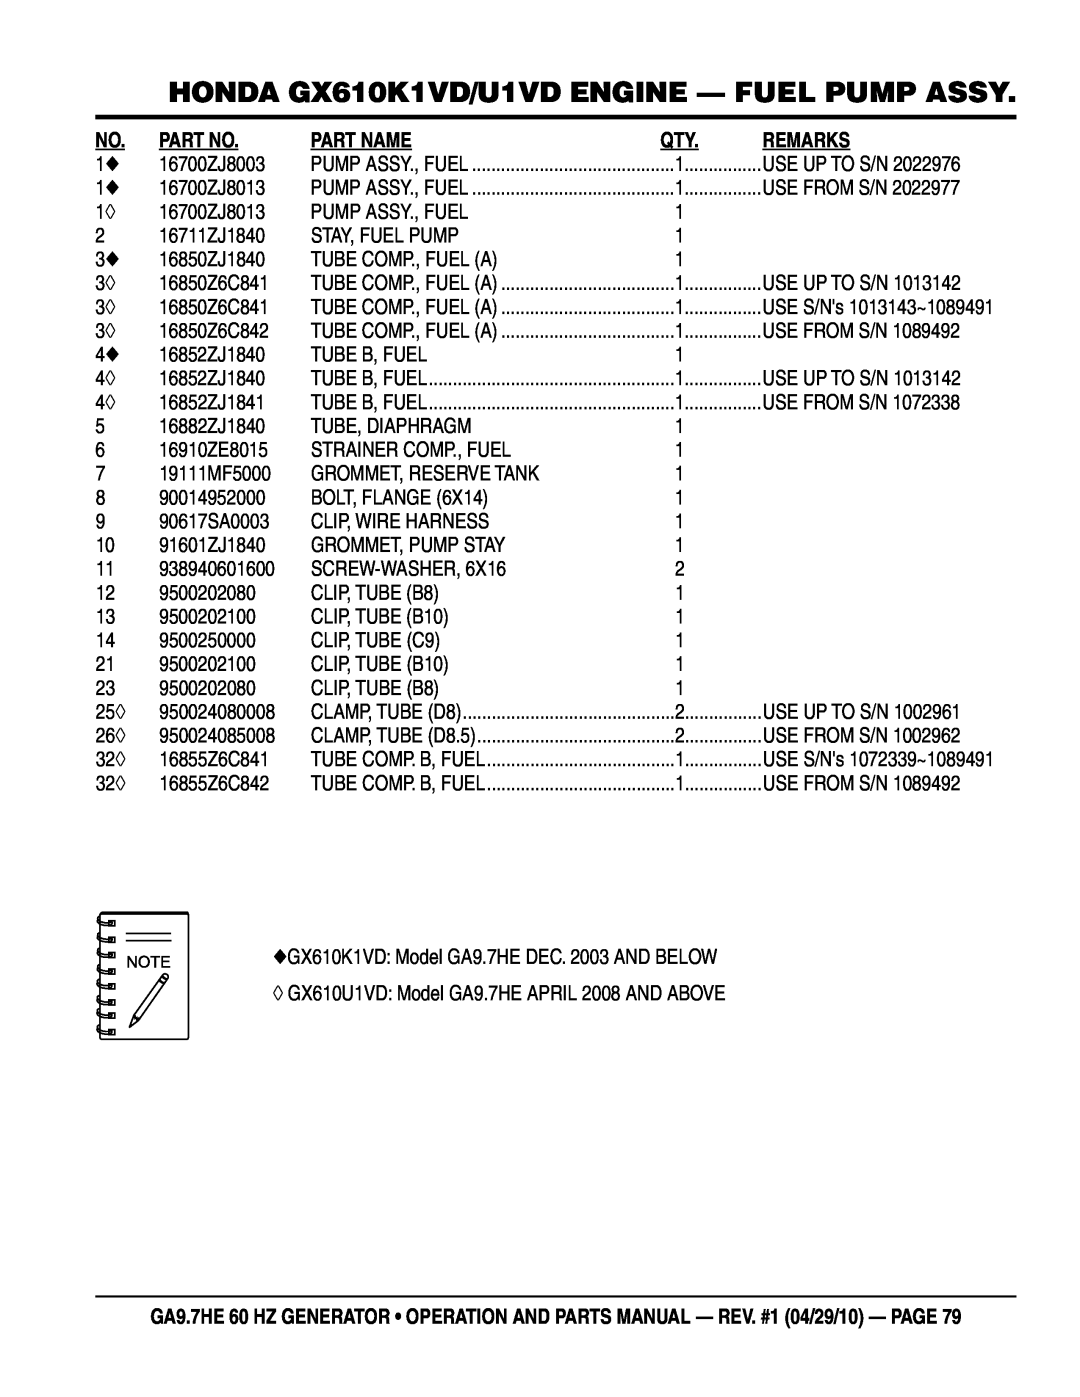 Multiquip ga-9.7HE manual HONDA GX610K1VD/U1VD ENGINE - FUEL PUMP ASSY, Part Name, Remarks, USE S/Ns 1013143~1089491 